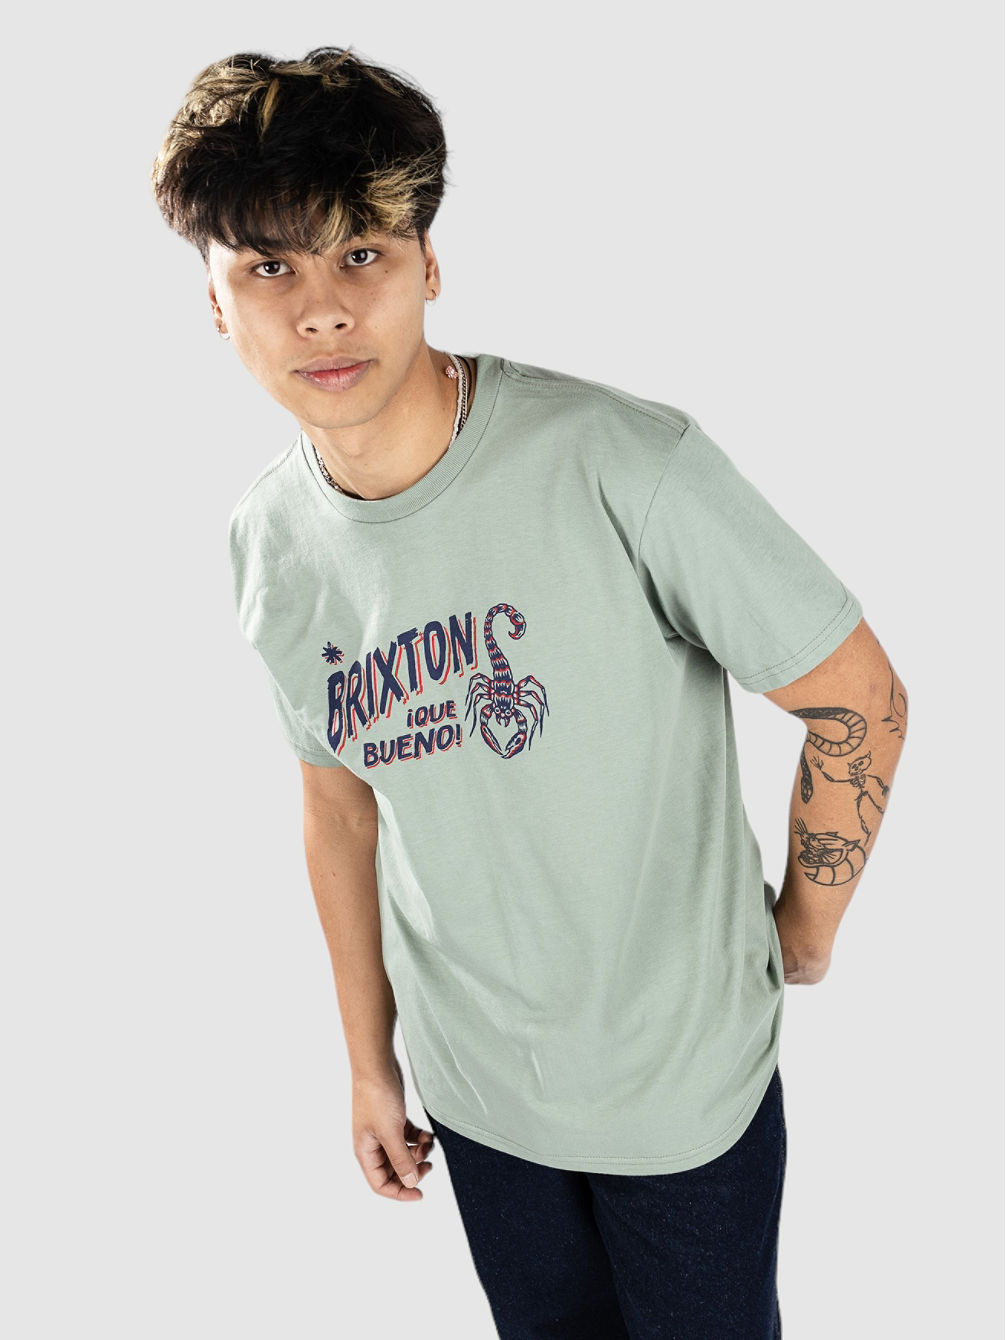 Vinton Standard T-shirt